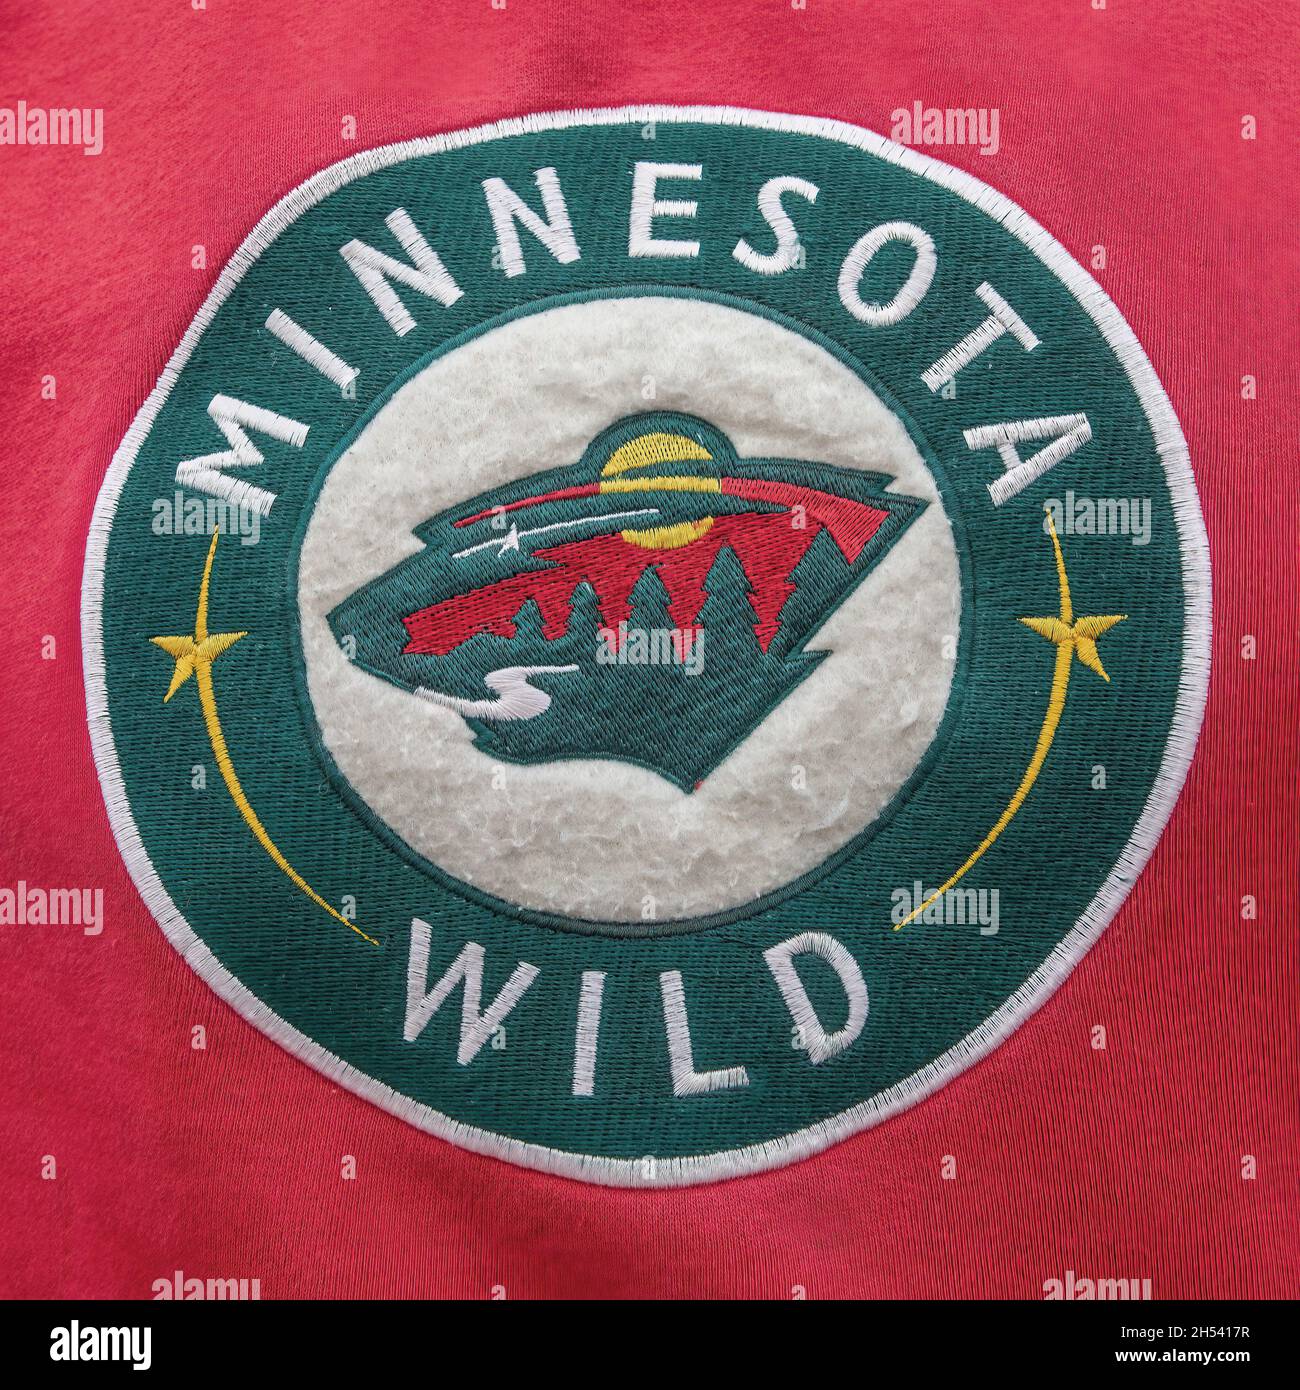 Minnesota Wild Hockey Stock Vector Illustration and Royalty Free Minnesota Wild  Hockey Clipart